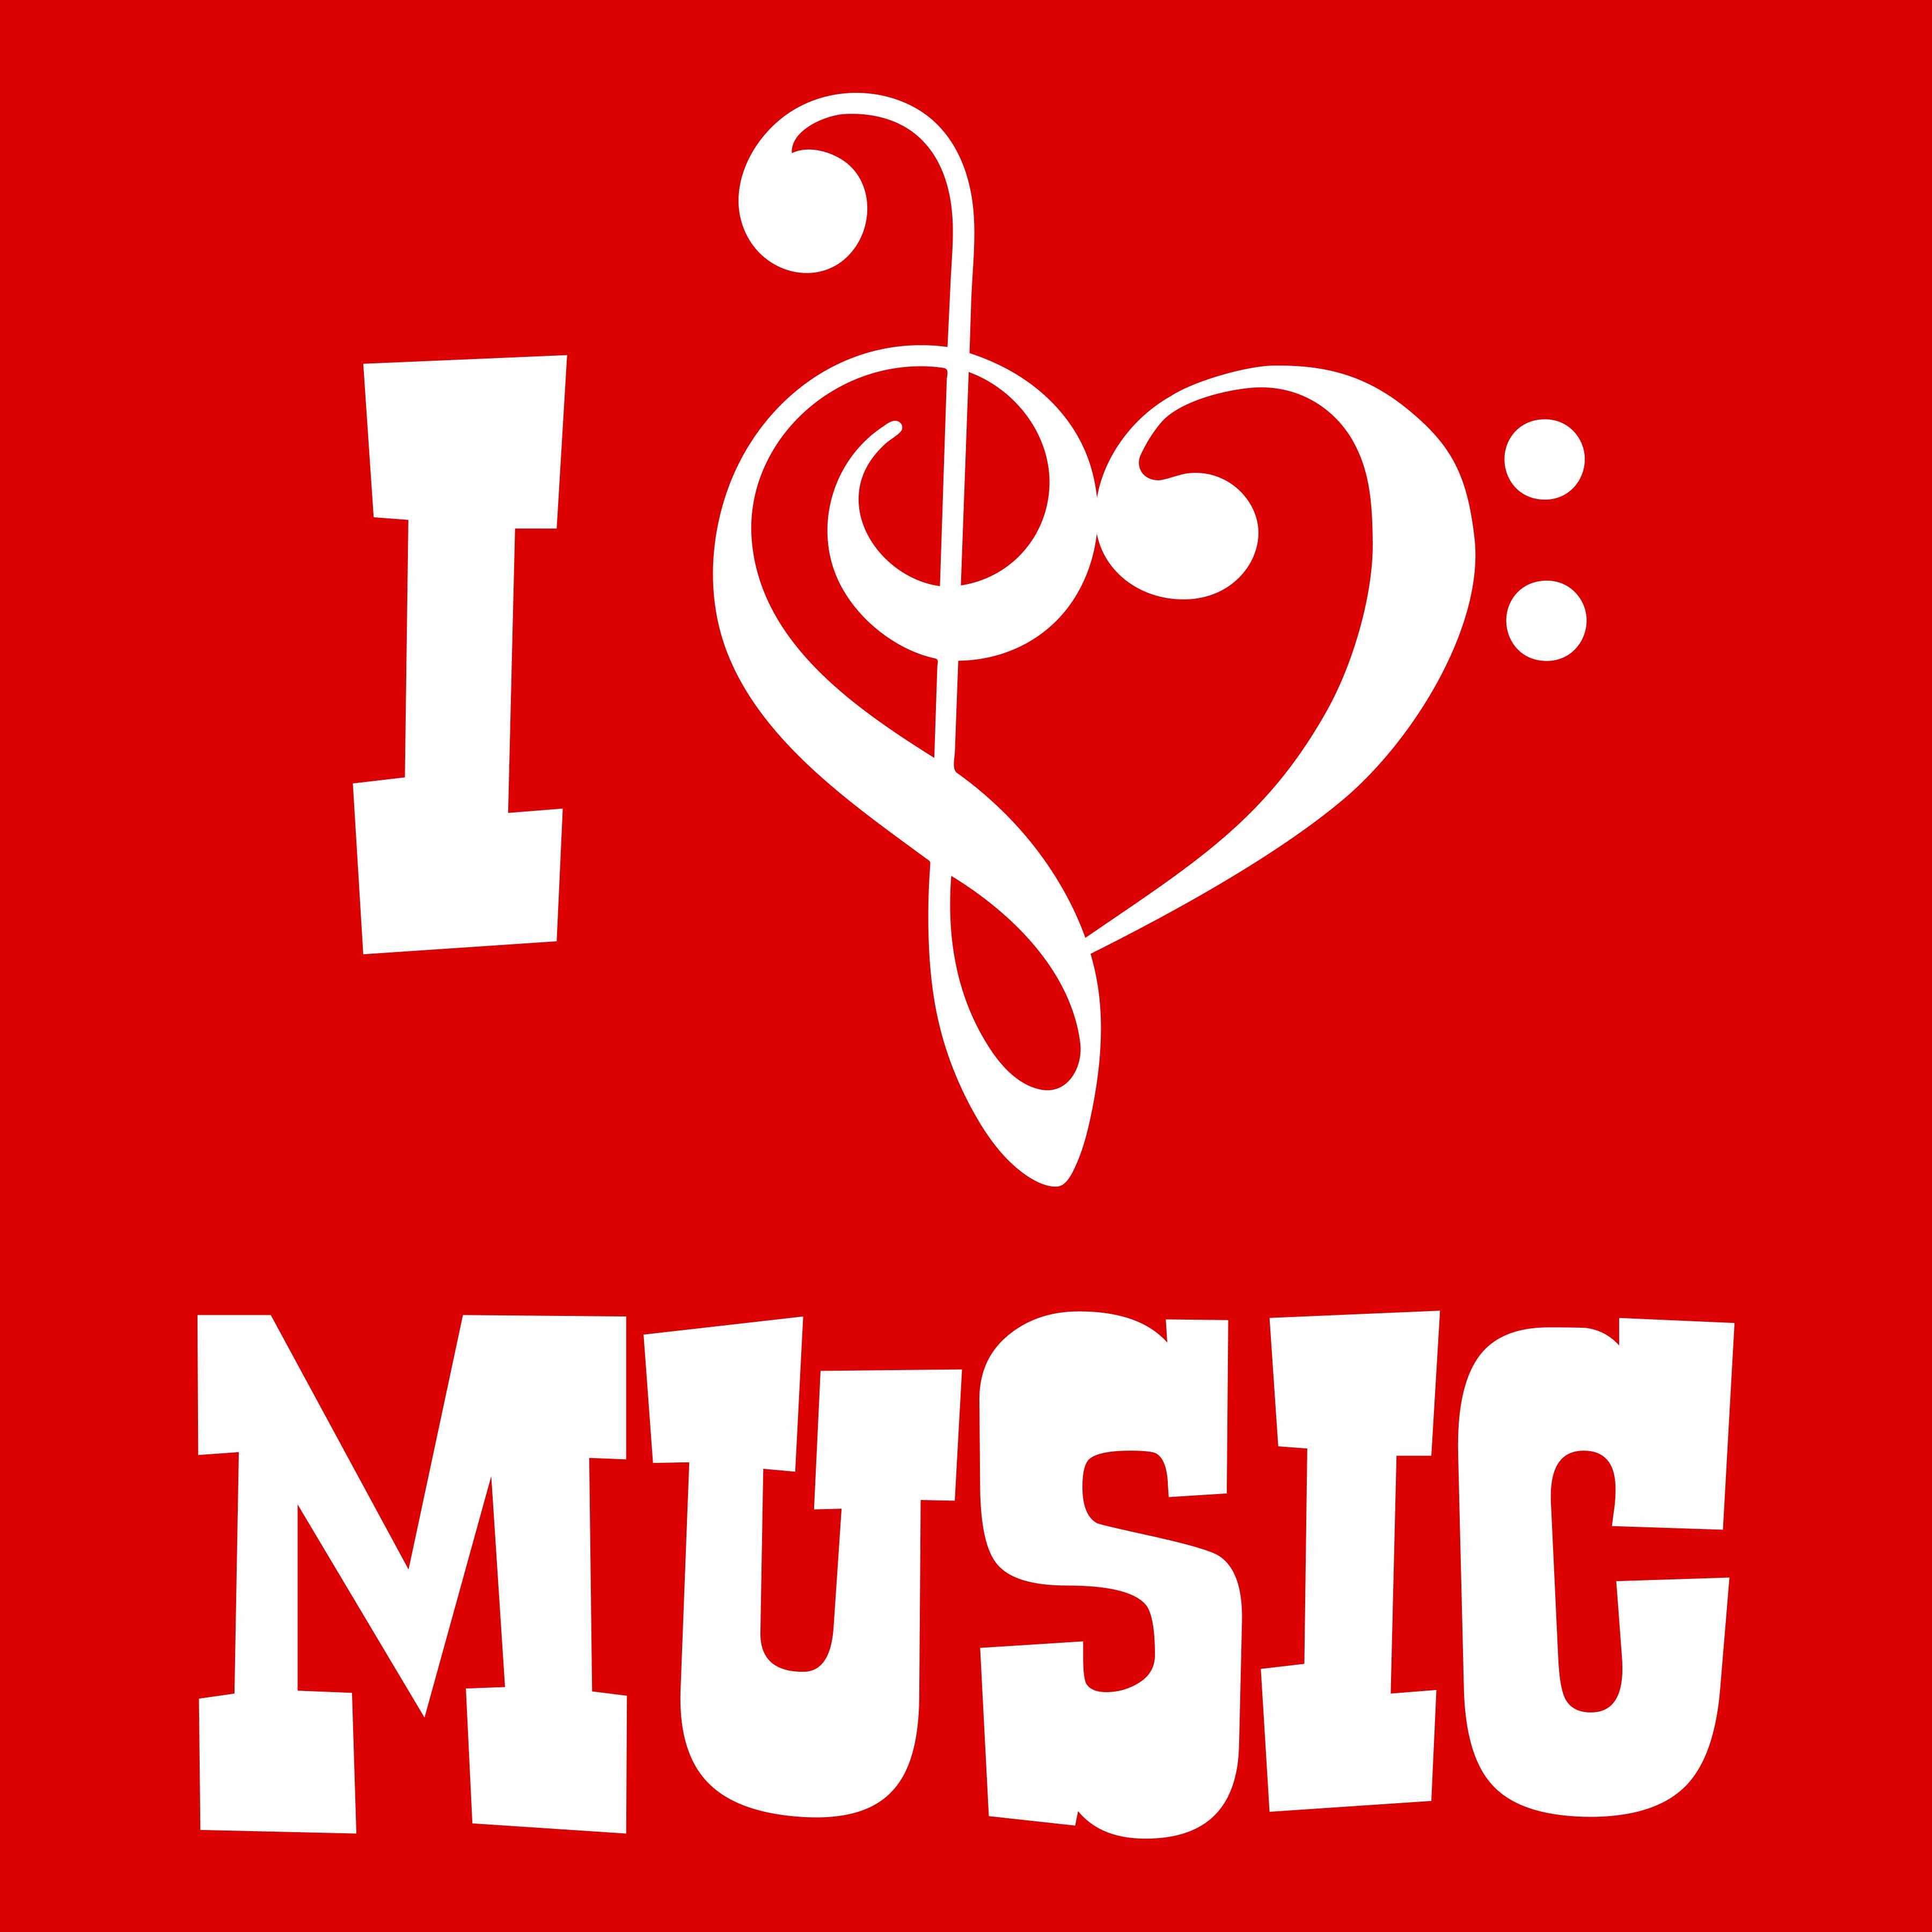 Love this music. Love Music. А лов Мьюзик картинка. I Love School надпись. Music Club школа музыки.